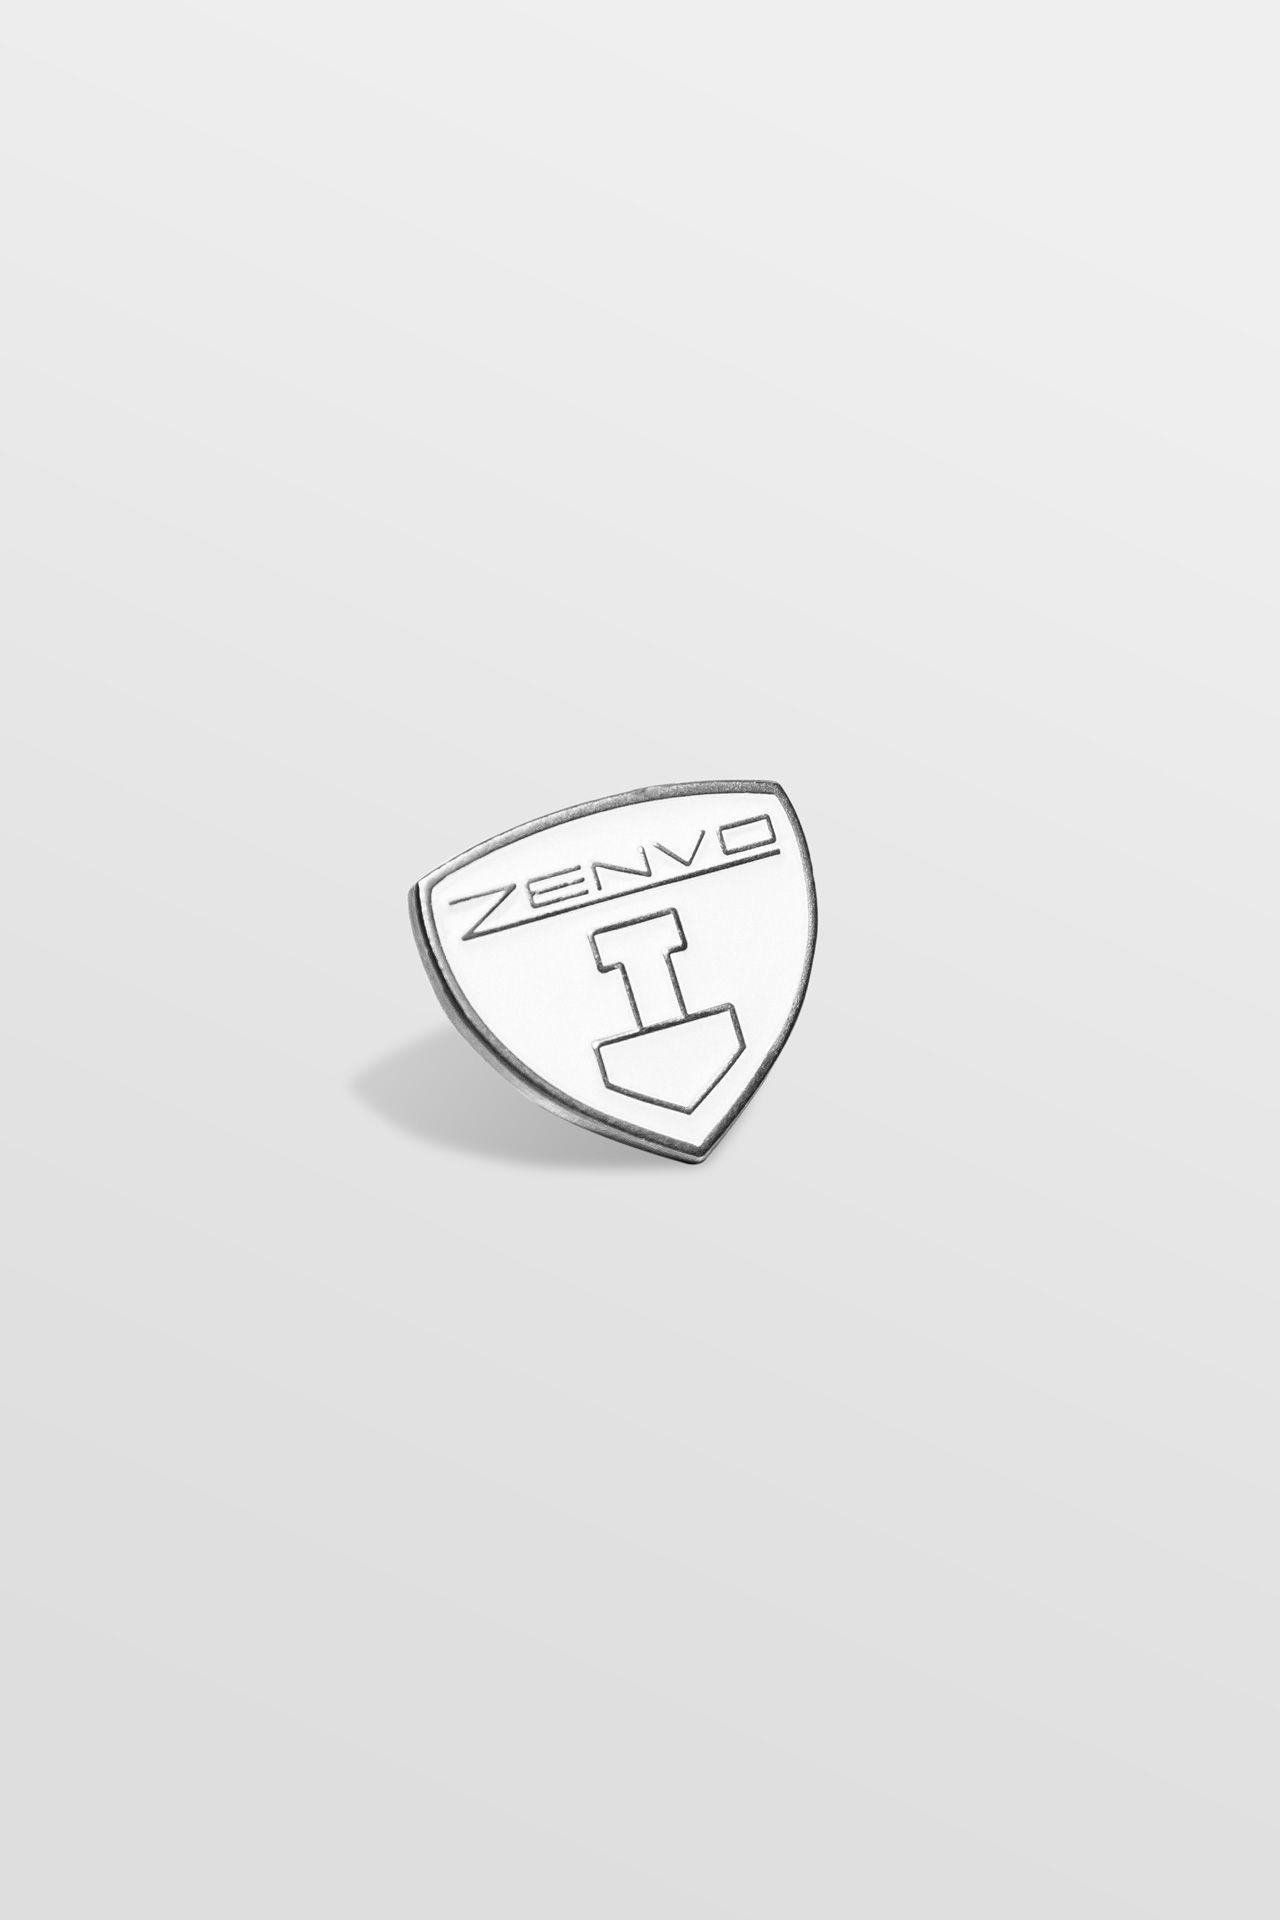 Zenvo Logo - Zenvo Carbon Fibre Ball Pen – Zenvo Automotive A/S